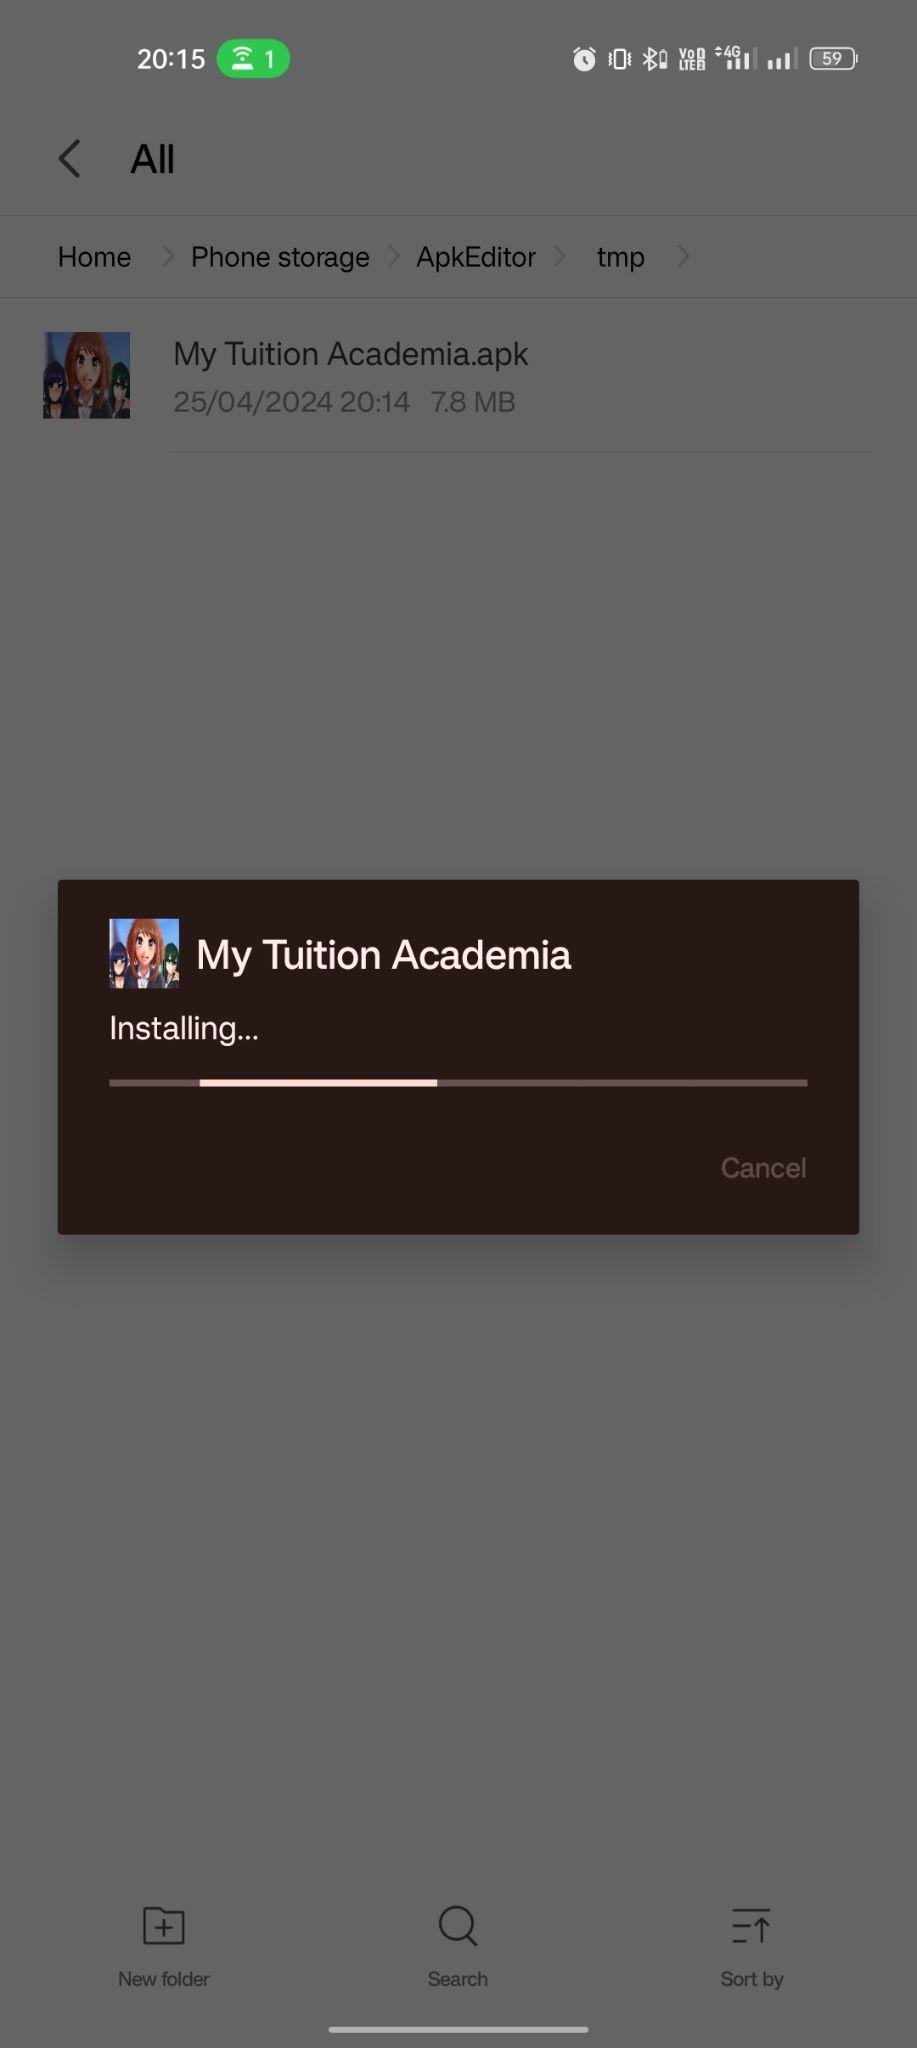 My Tuition Academia apk installing